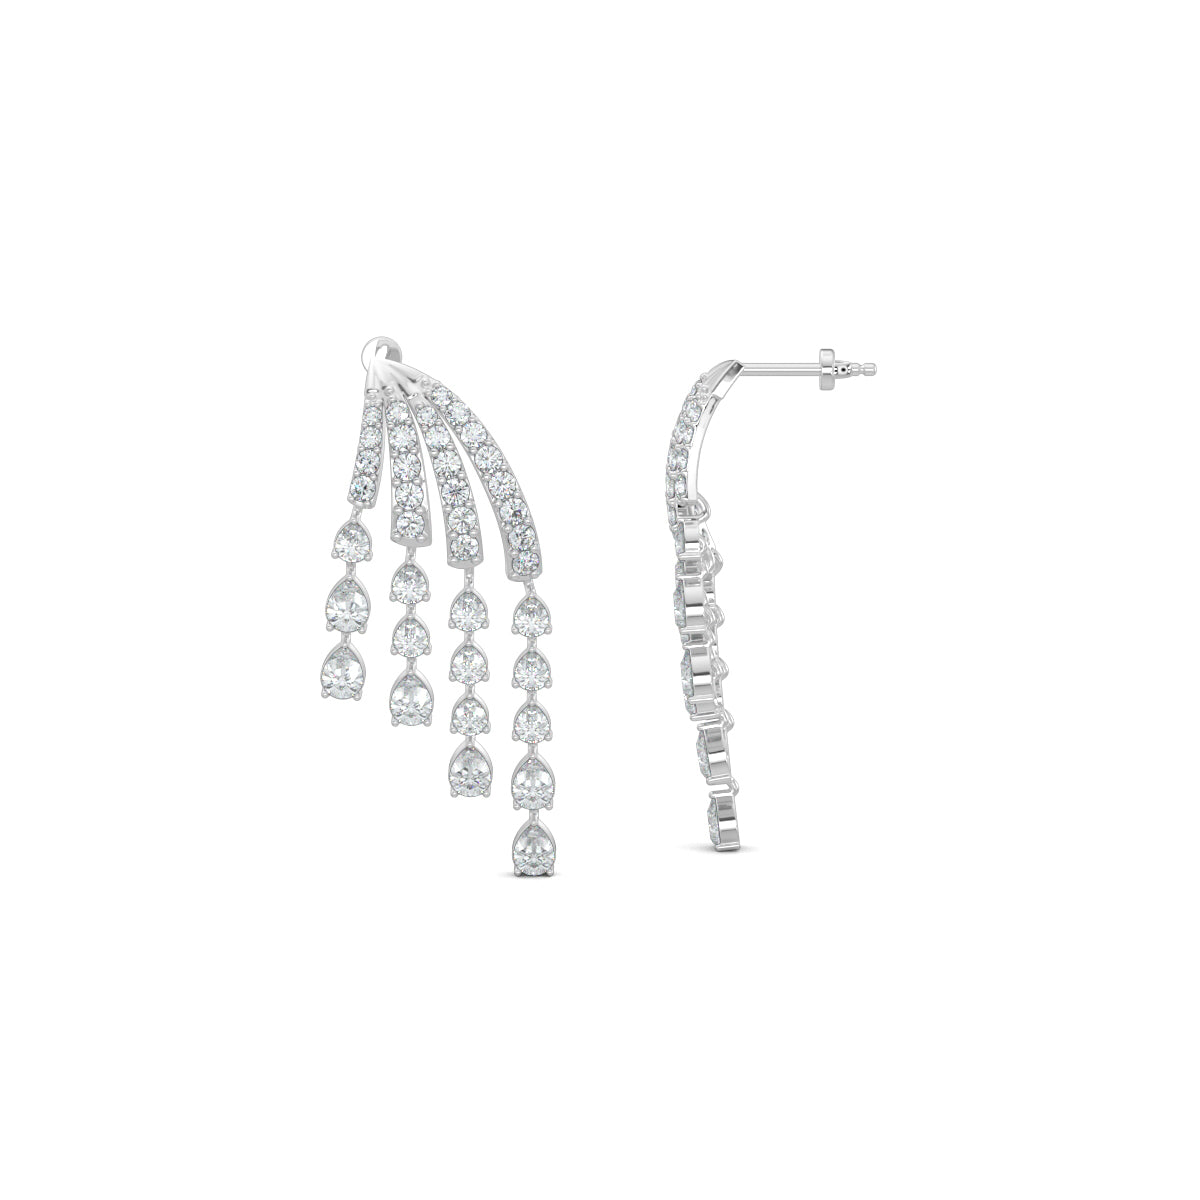 White Gold, Diamond Earrings, Azure Droplet Earrings, natural diamonds, lab-grown diamonds, droplet earrings, diamond droplets, elegant earrings, nature-inspired jewelry, diamond jewelry